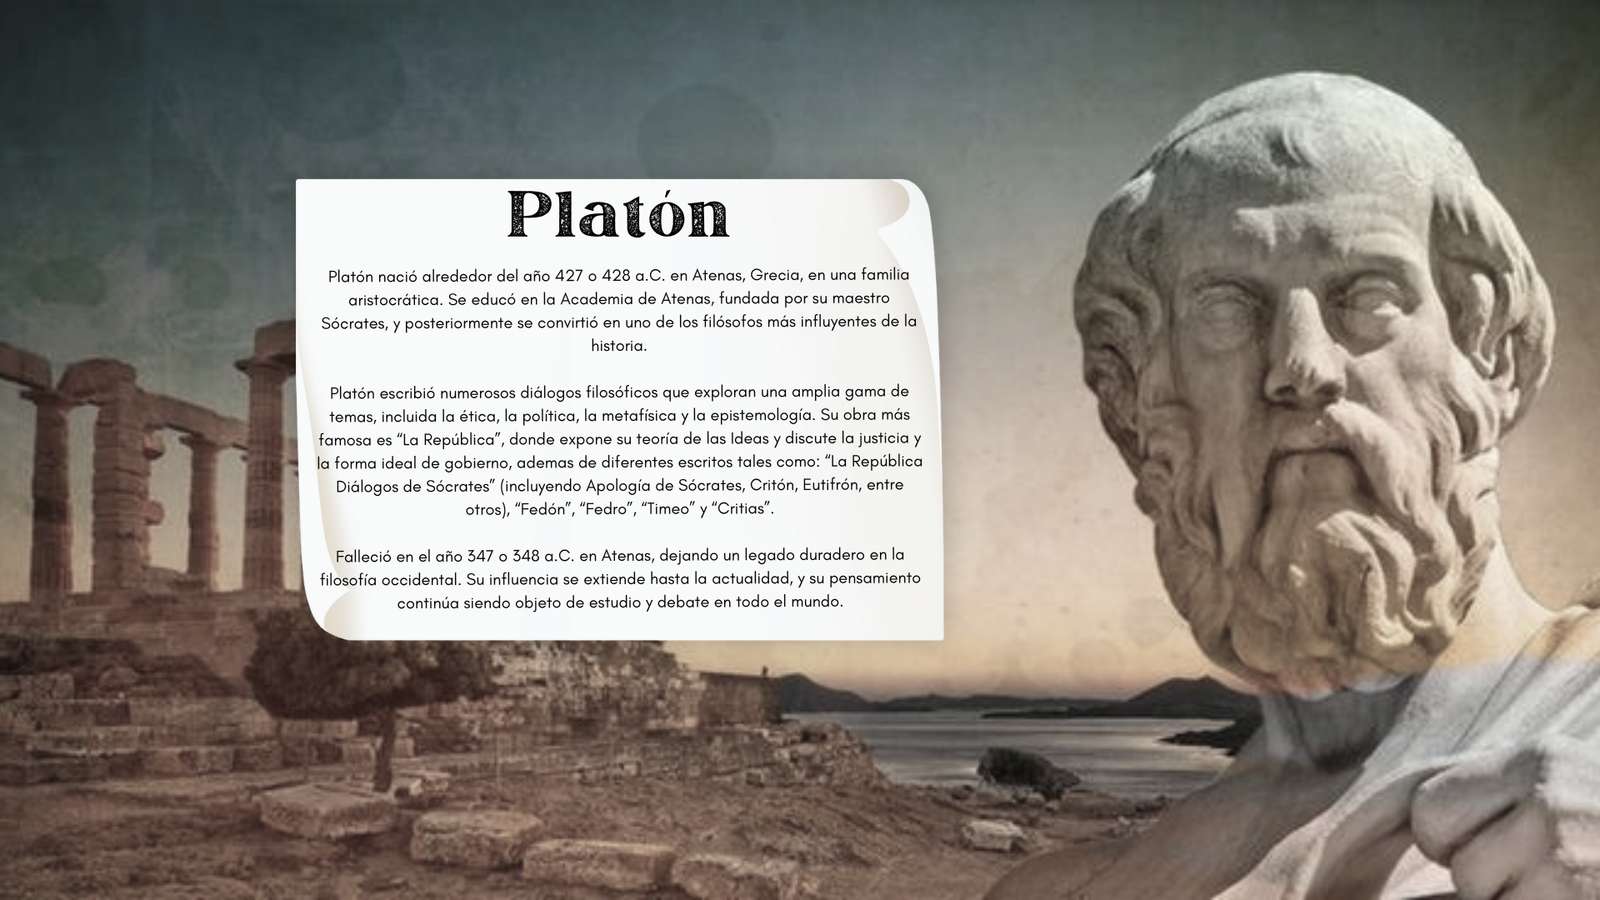 Platón rejtvény online puzzle